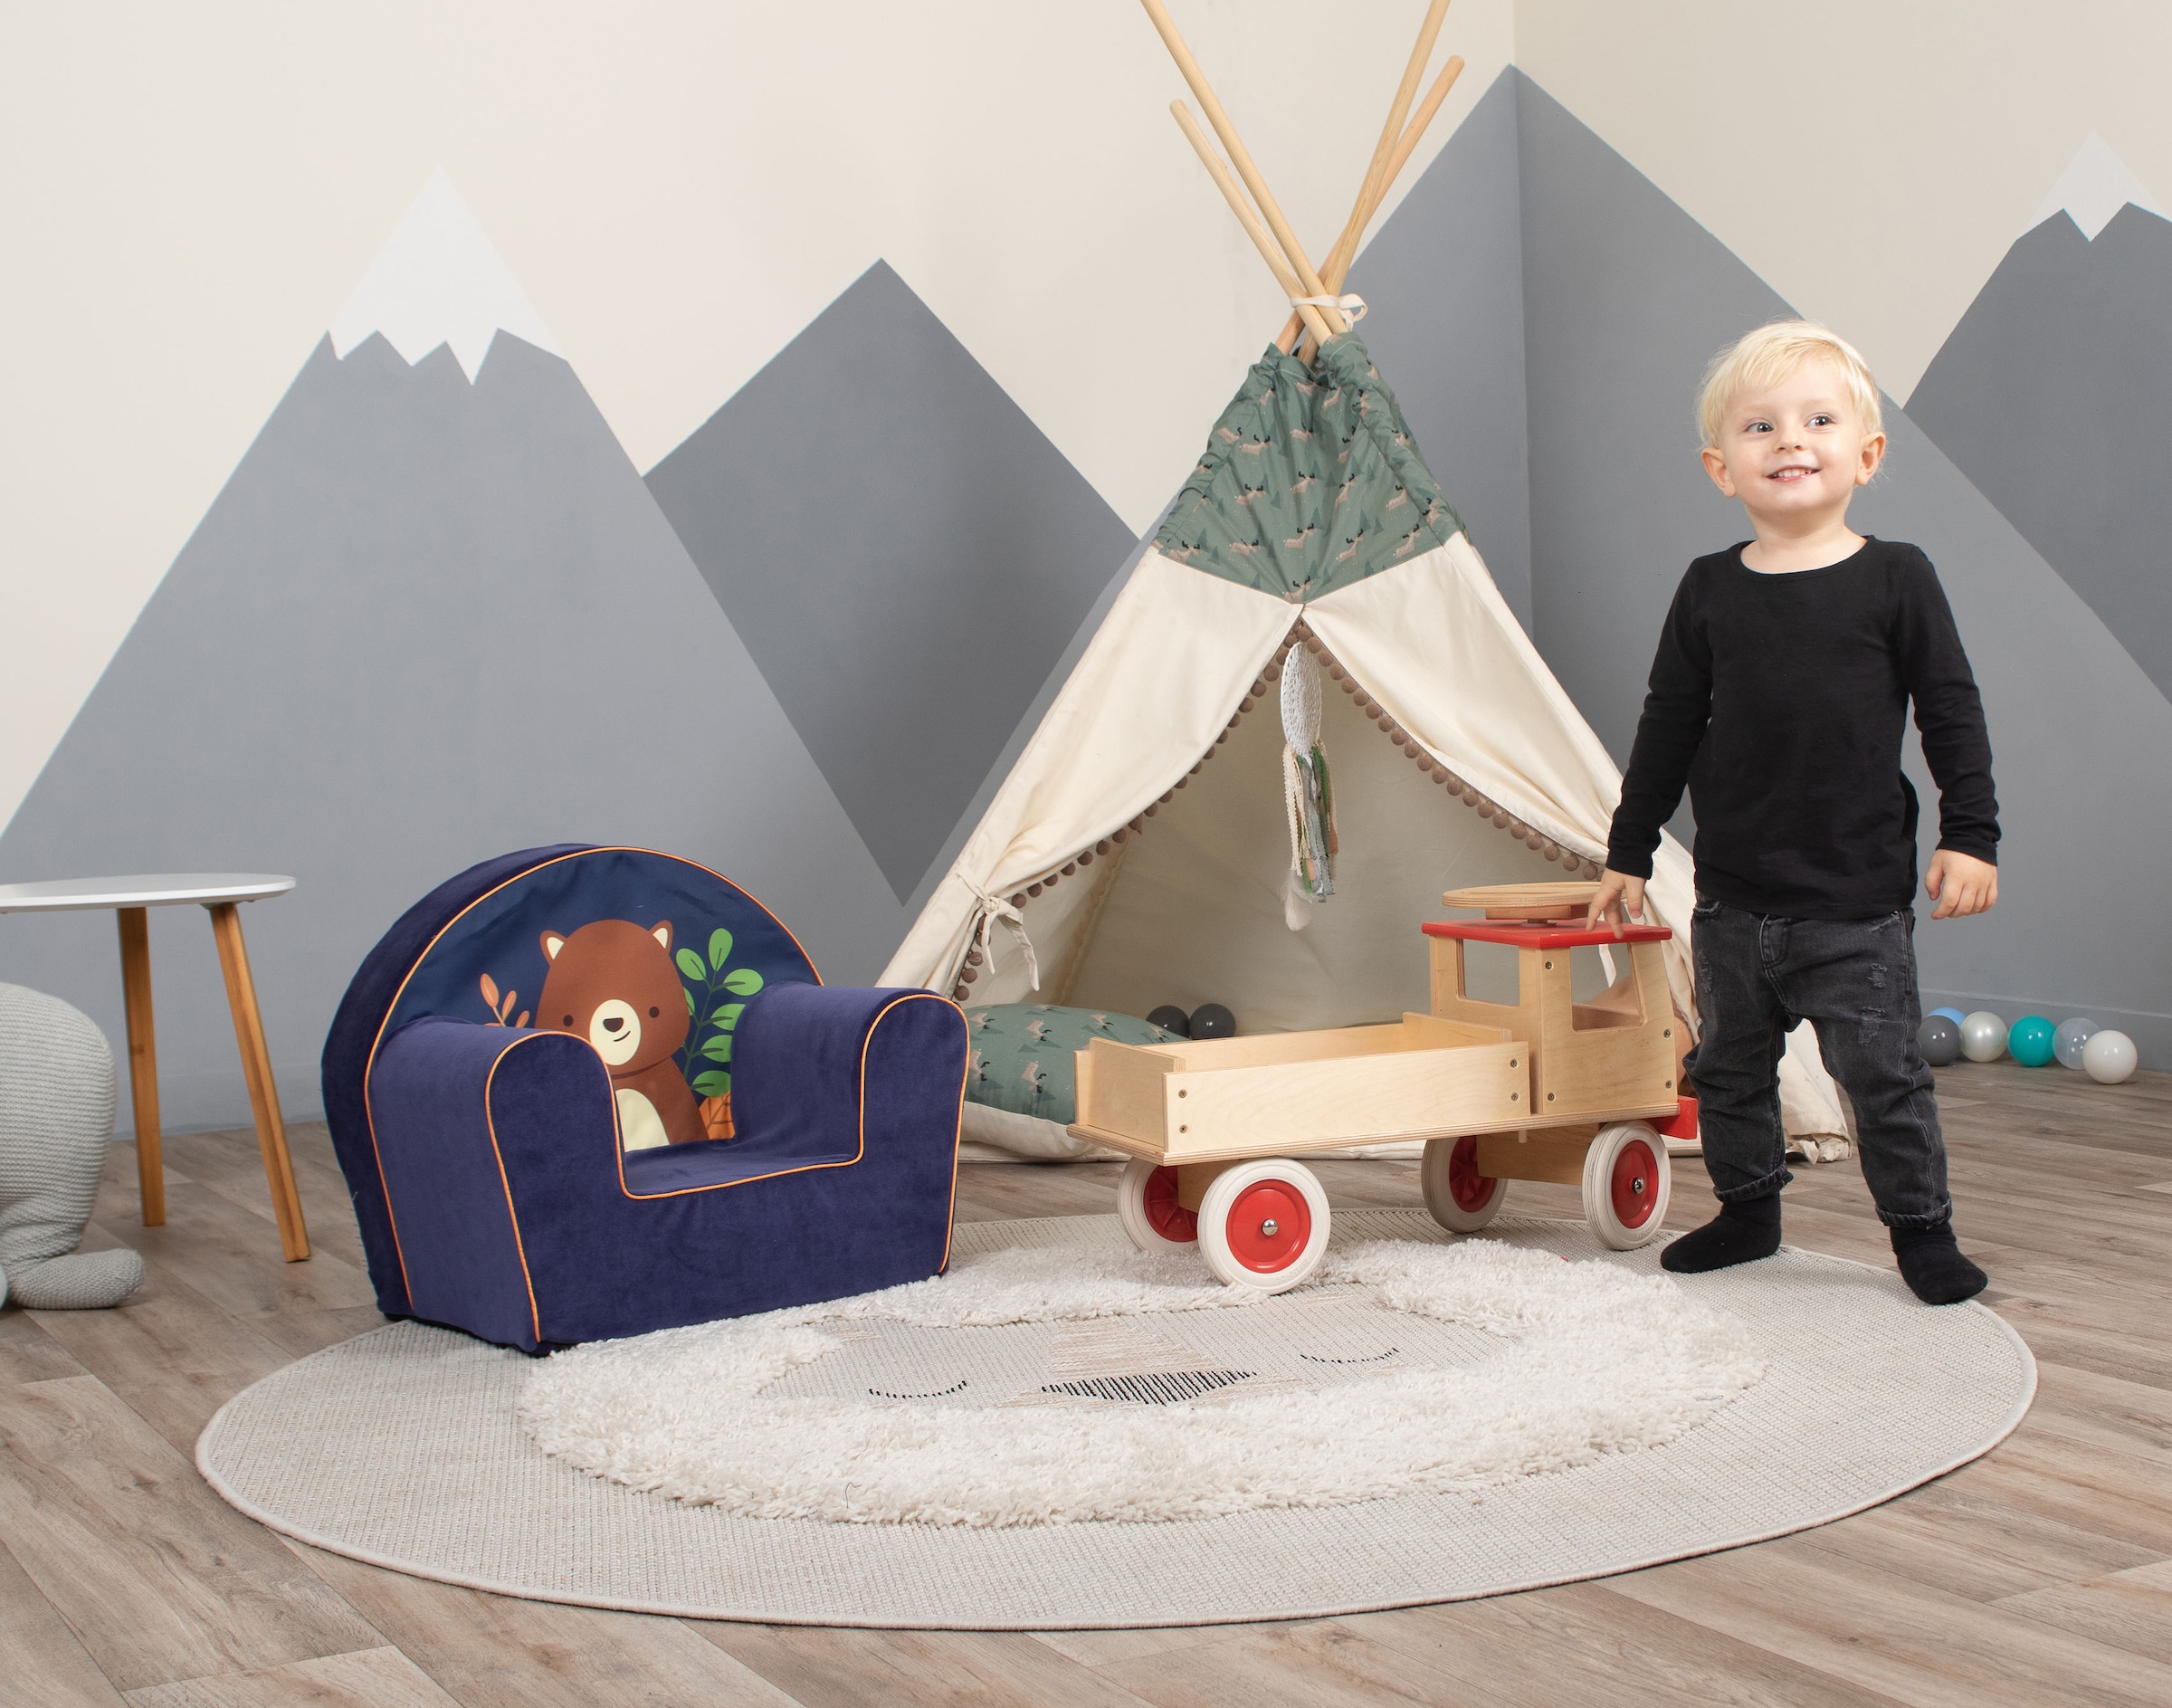 Knorrtoys® Sessel »Happy bear«, für Kinder; Made in Europe